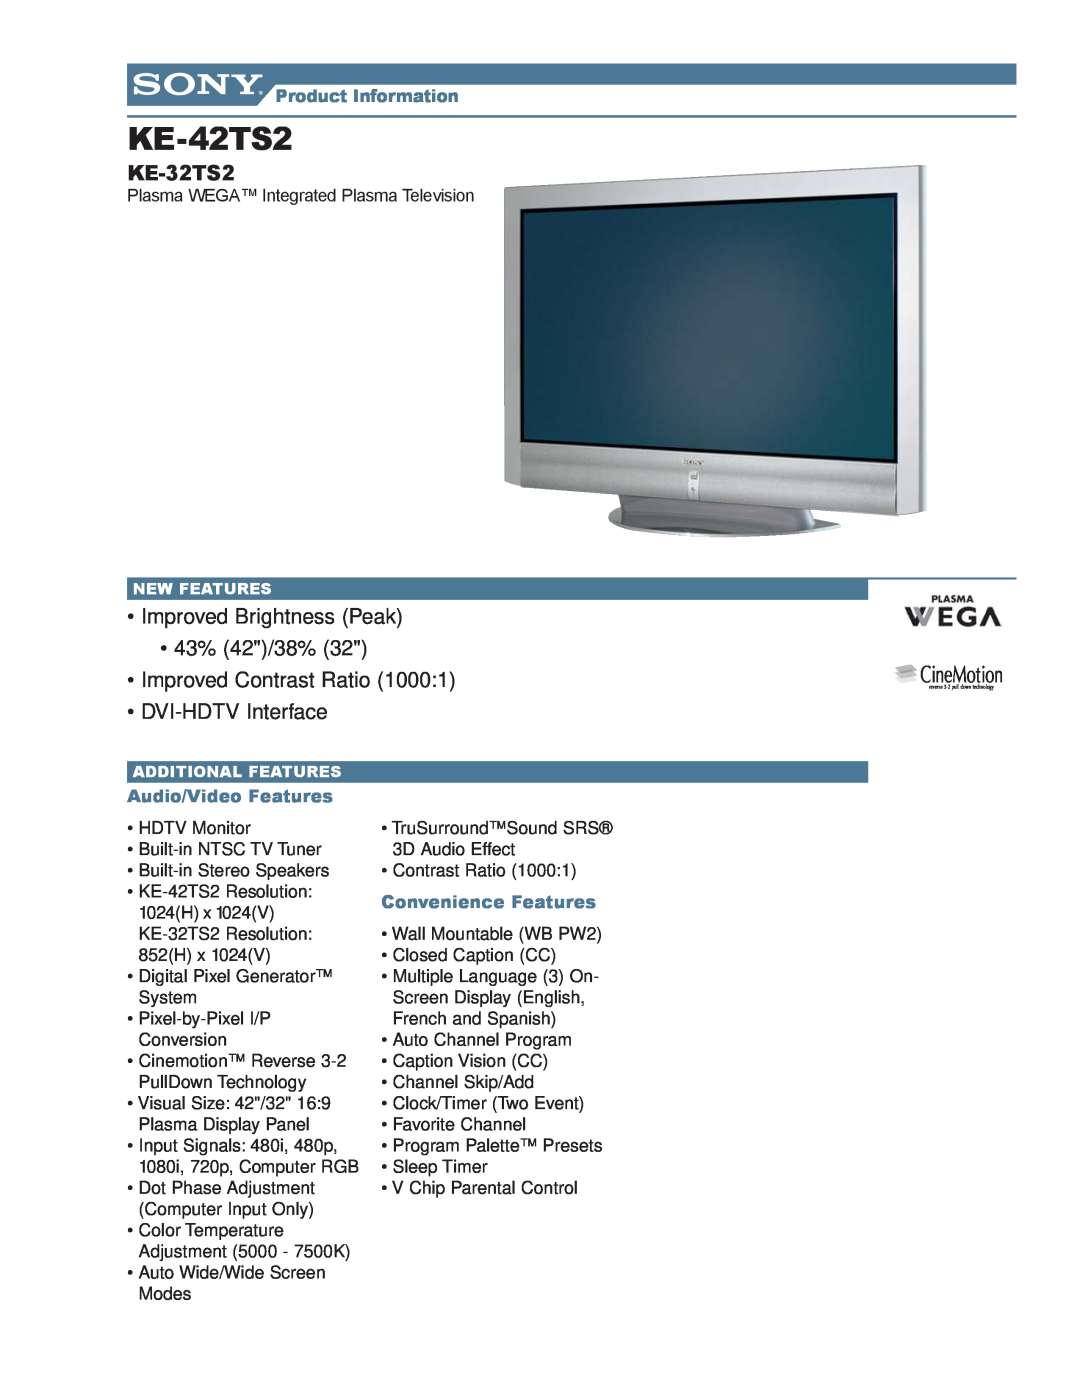 Sony KE-42TS2 manual KE-32TS2, Plasma WEGA Integrated Plasma Television, Audio/Video Features, Convenience Features 